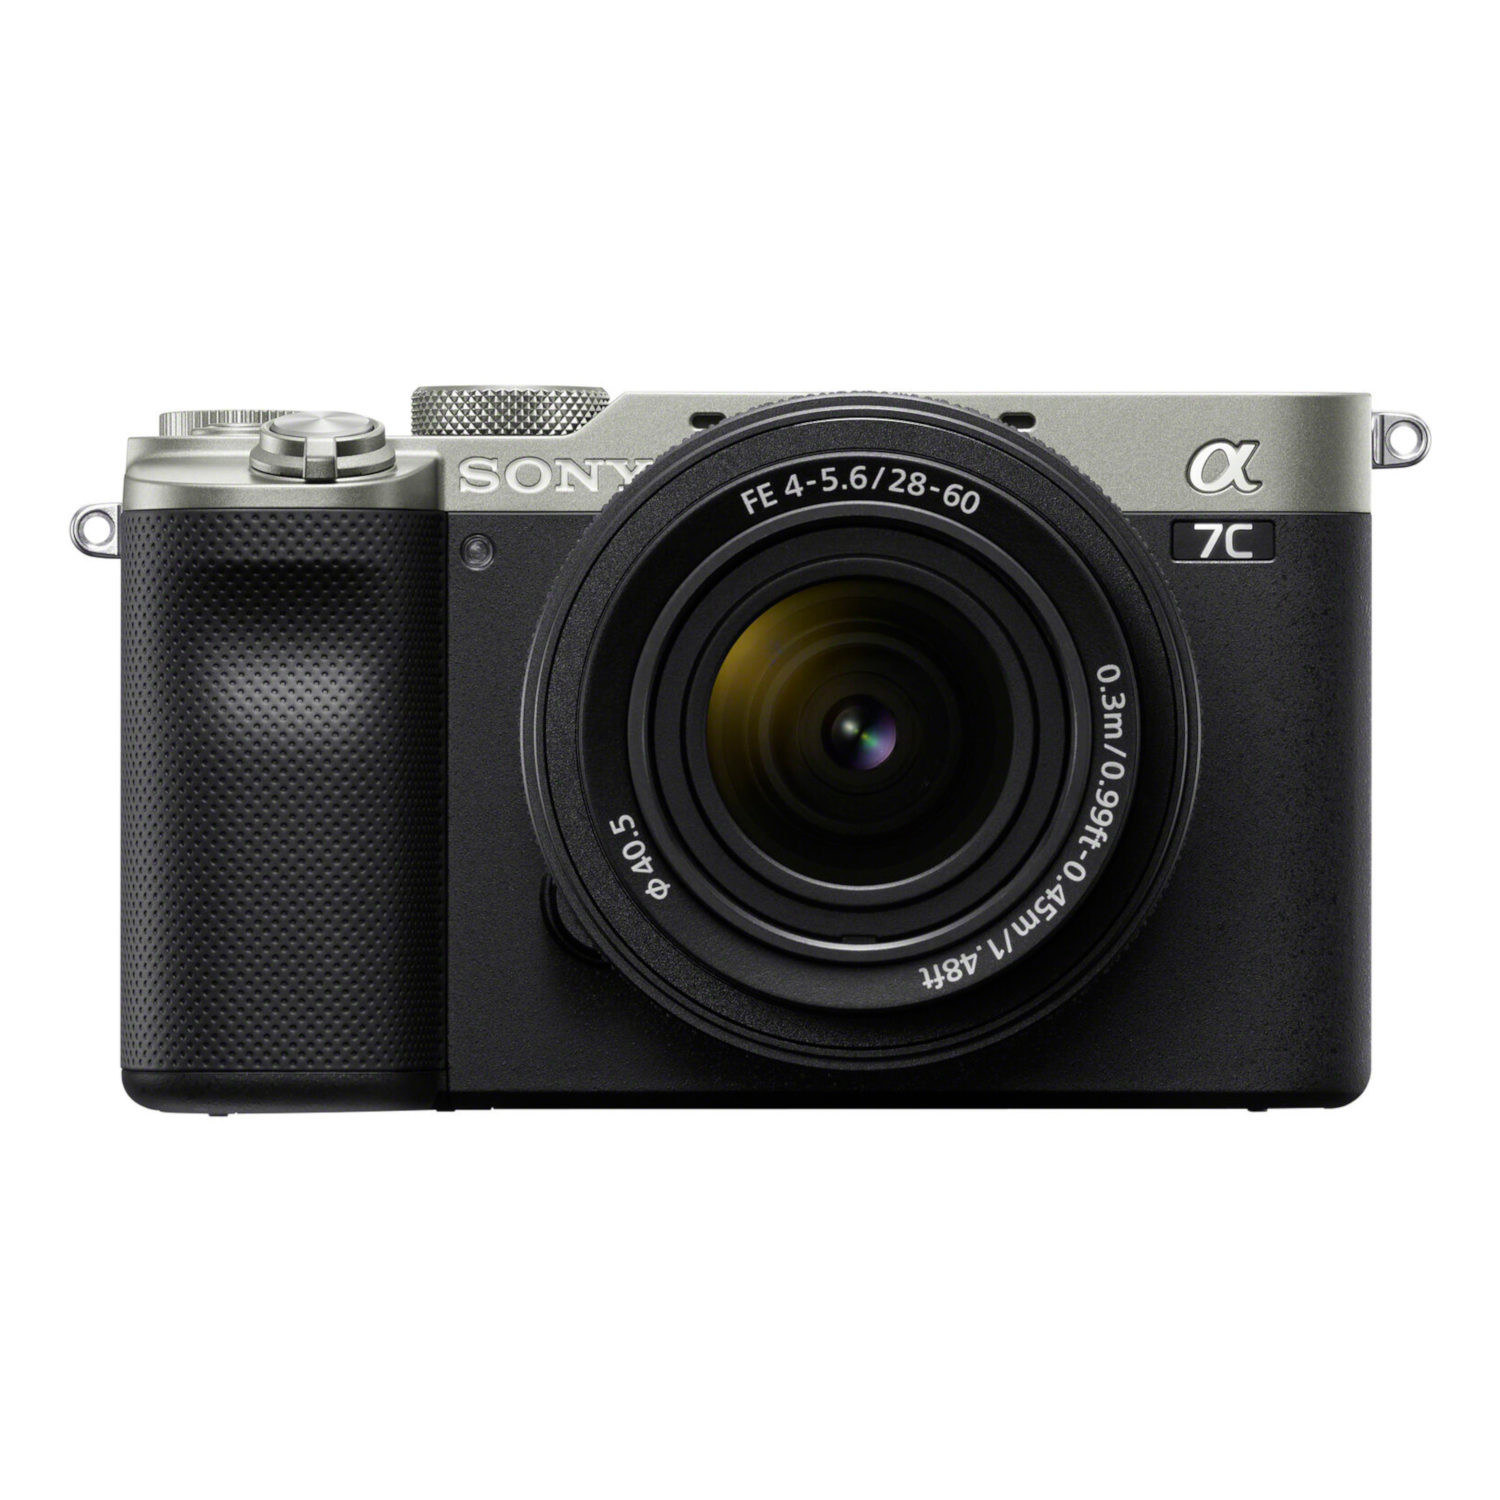 Fotocamera Mirrorless Sony A7C Silver + 28-60mm